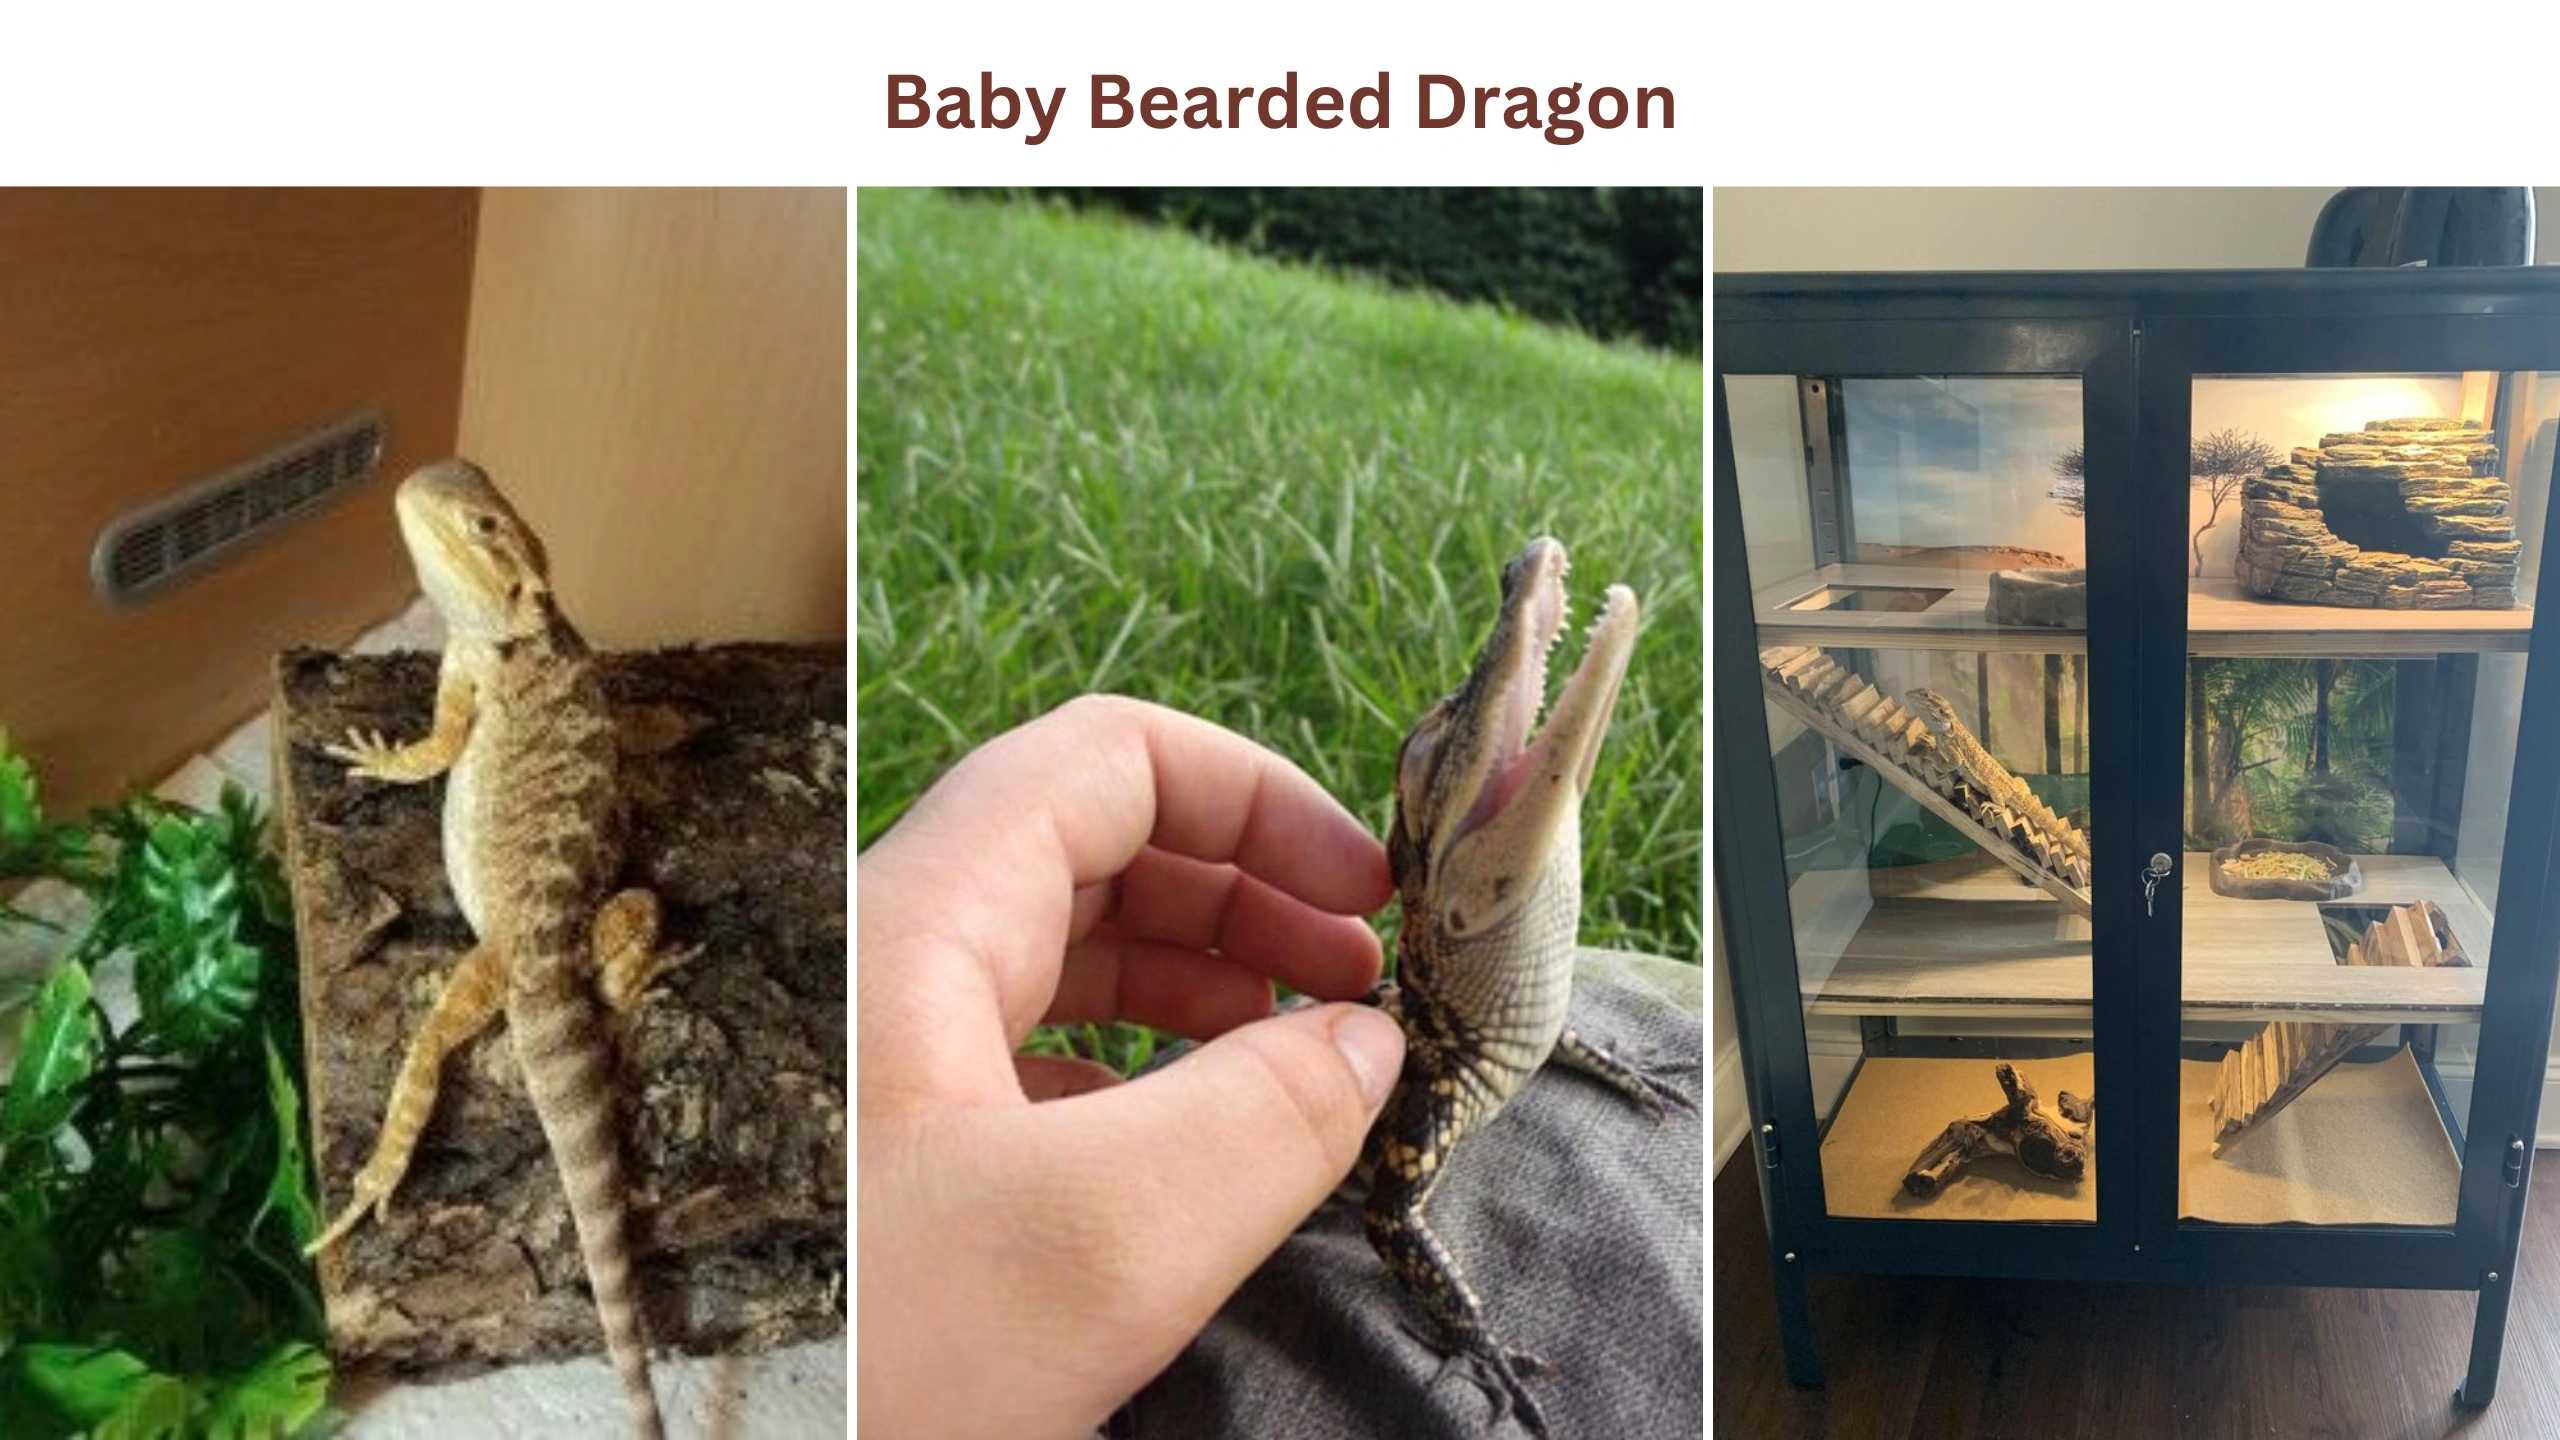 Baby bearded dragon